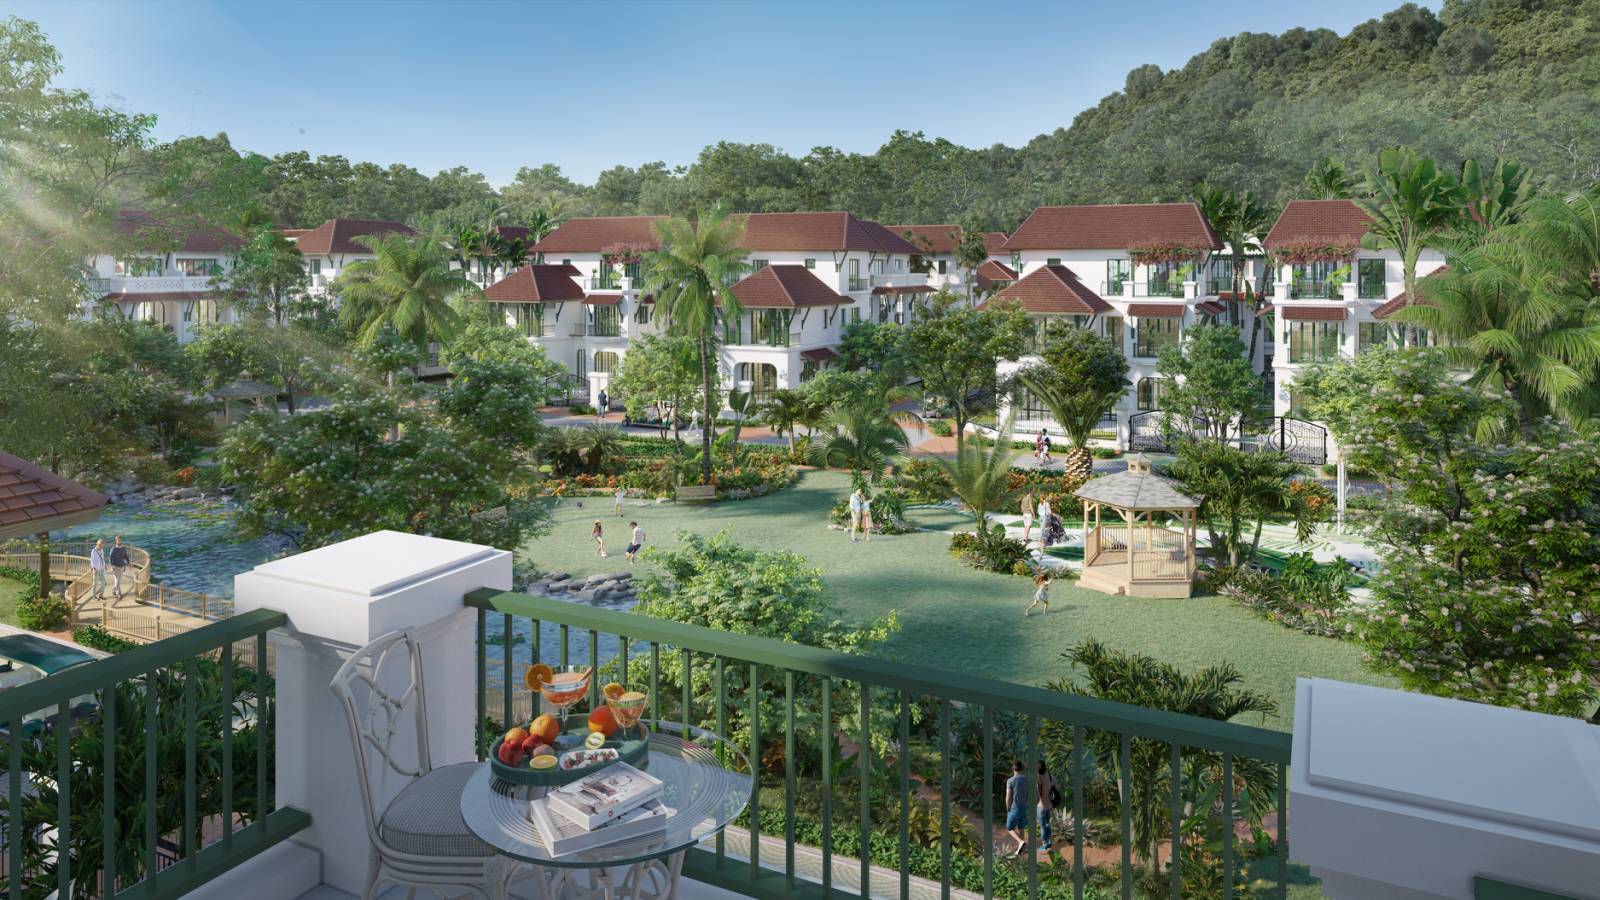 Sun Tropical Village: Giải mã sức hấp dẫn của phân khu Tropical Park - Ảnh 1.